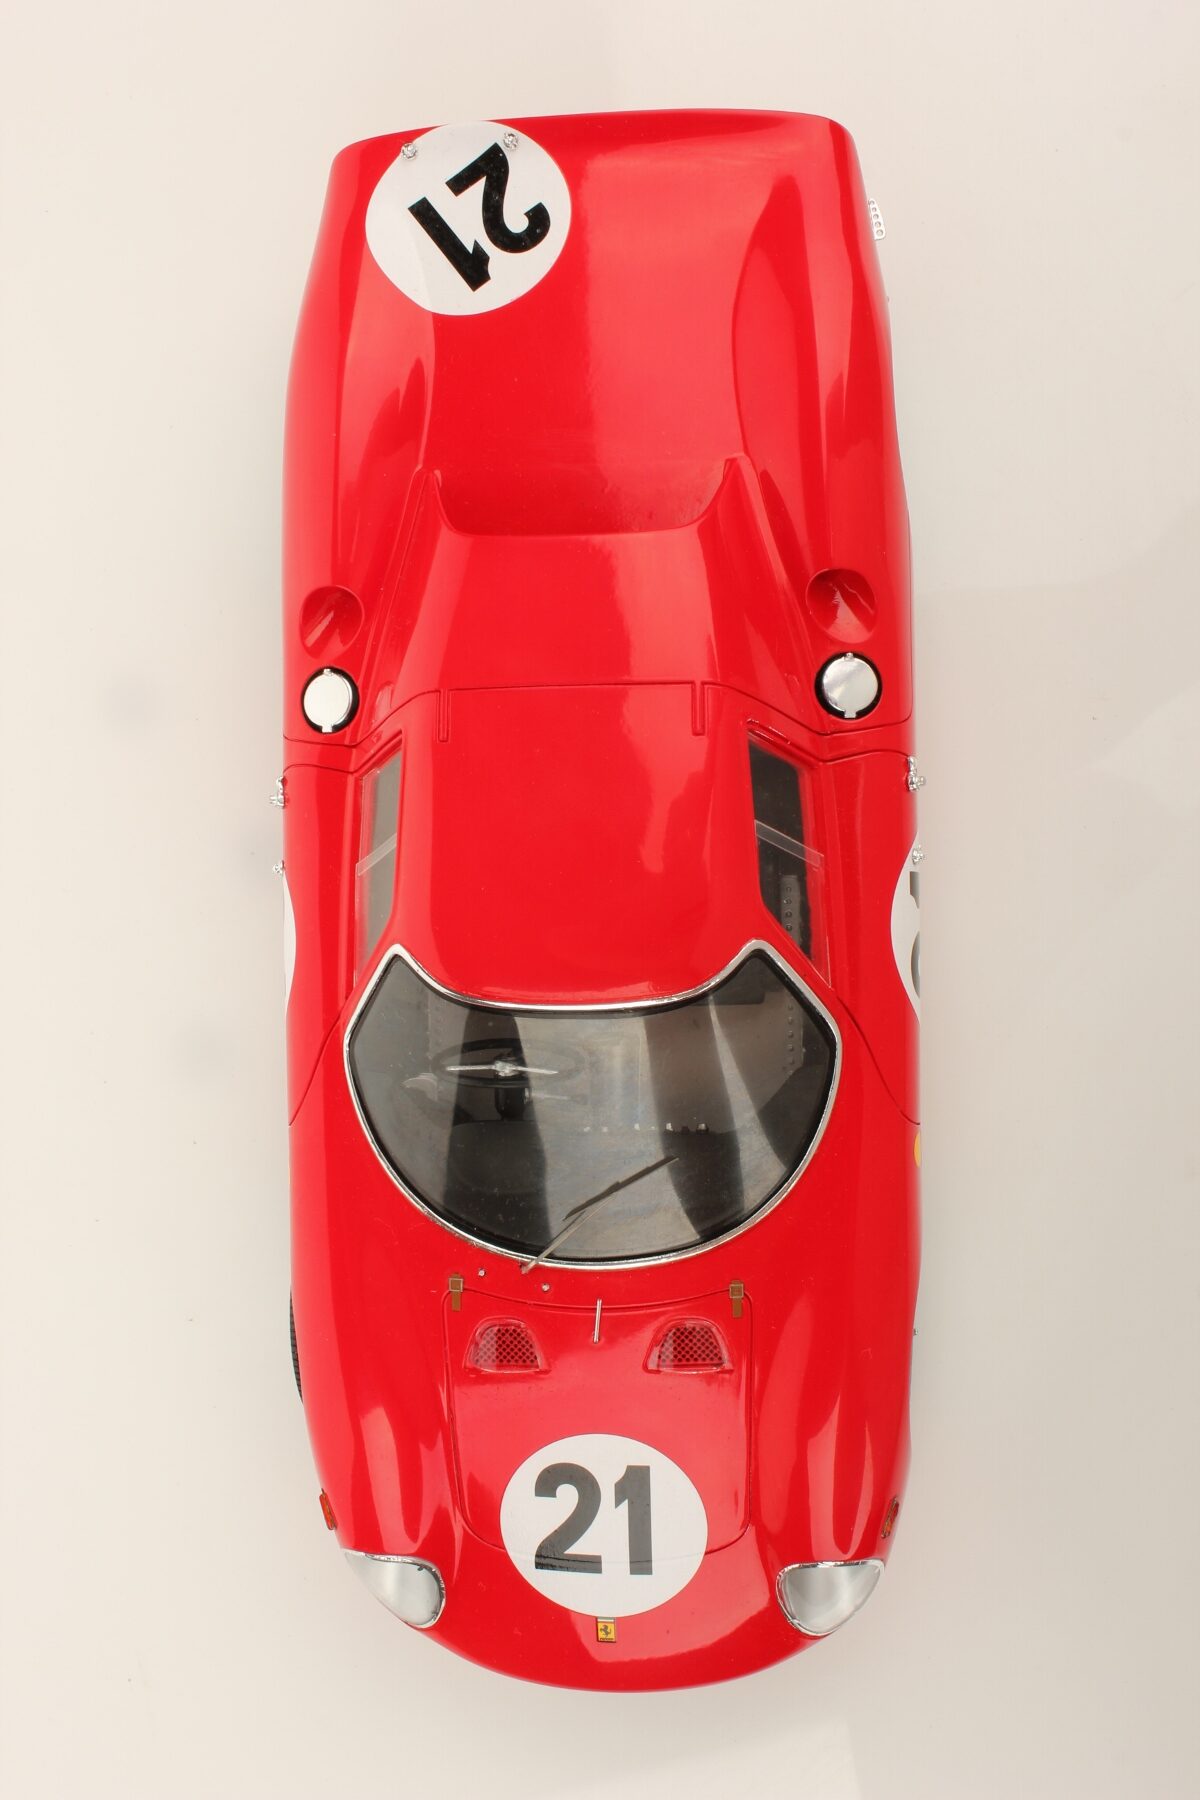 Ferrari 250 LM Le Mans 1965 1:18 - Looksmart Models